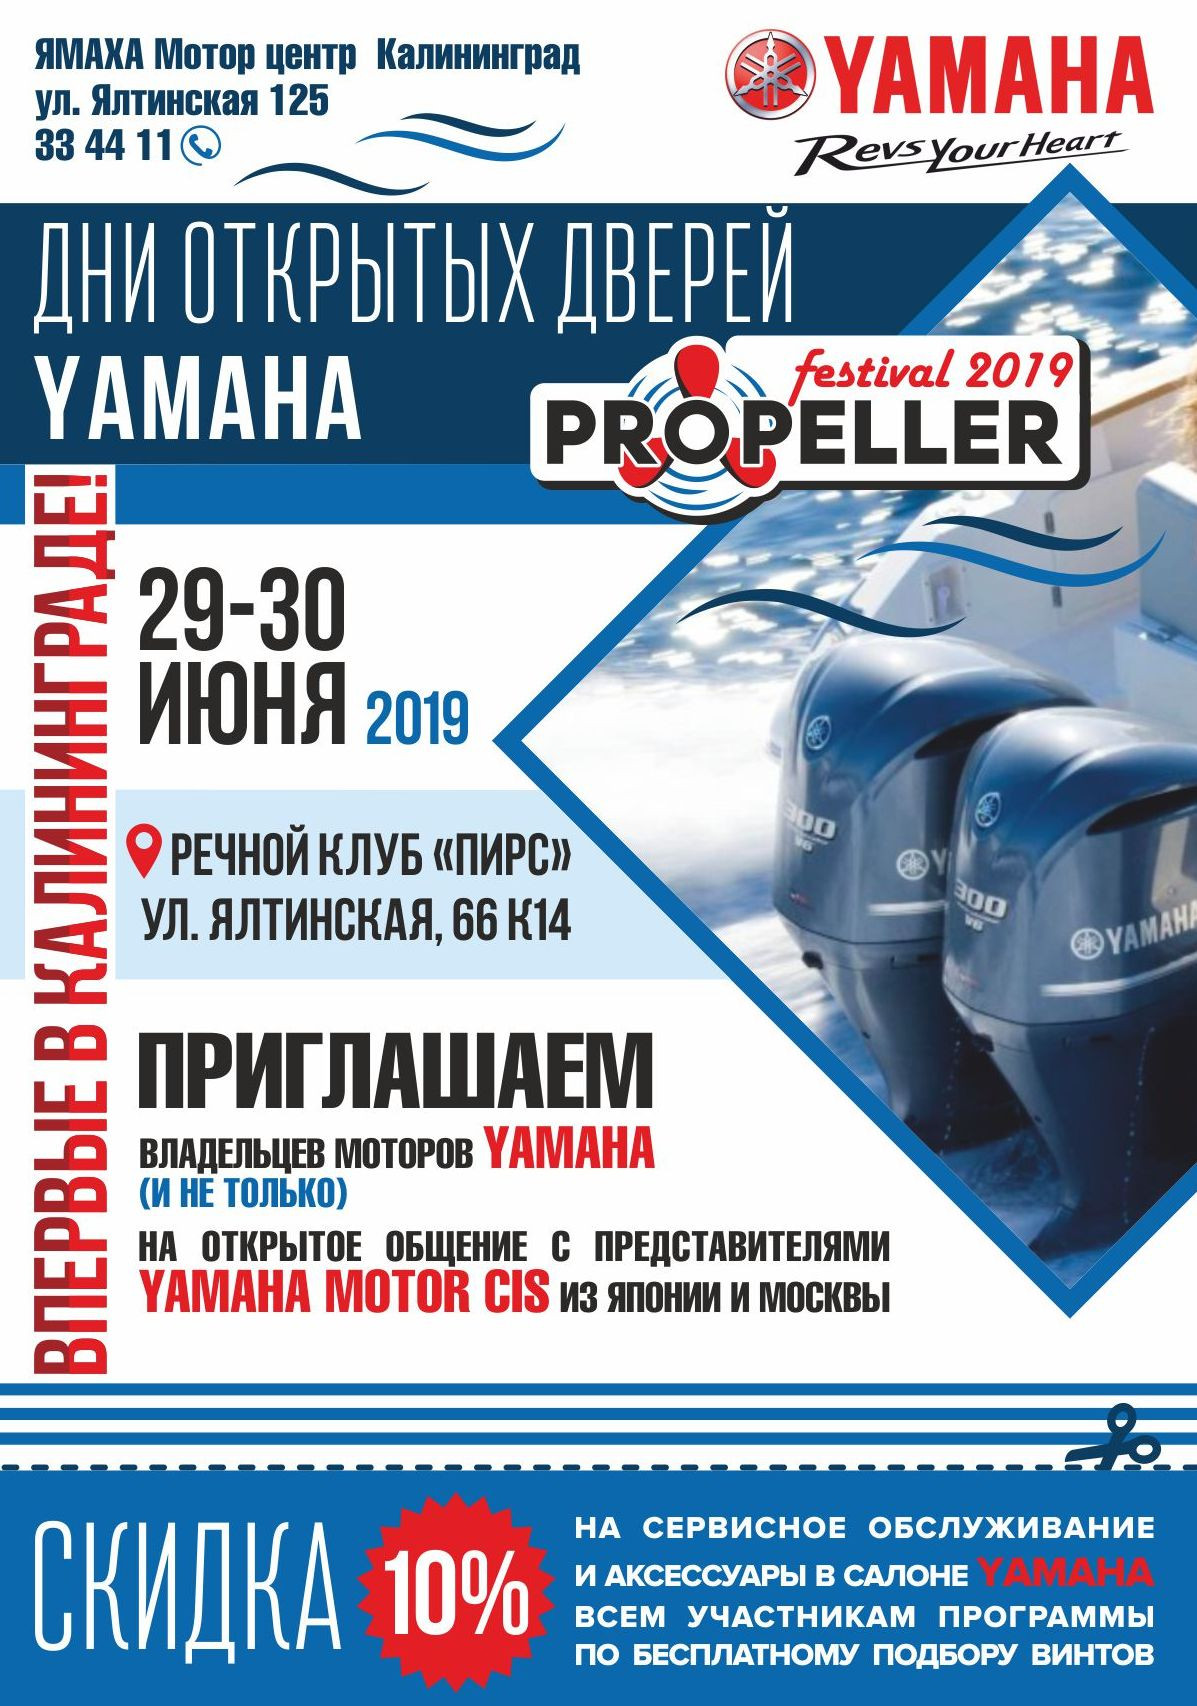 Yamaha Propeller festival